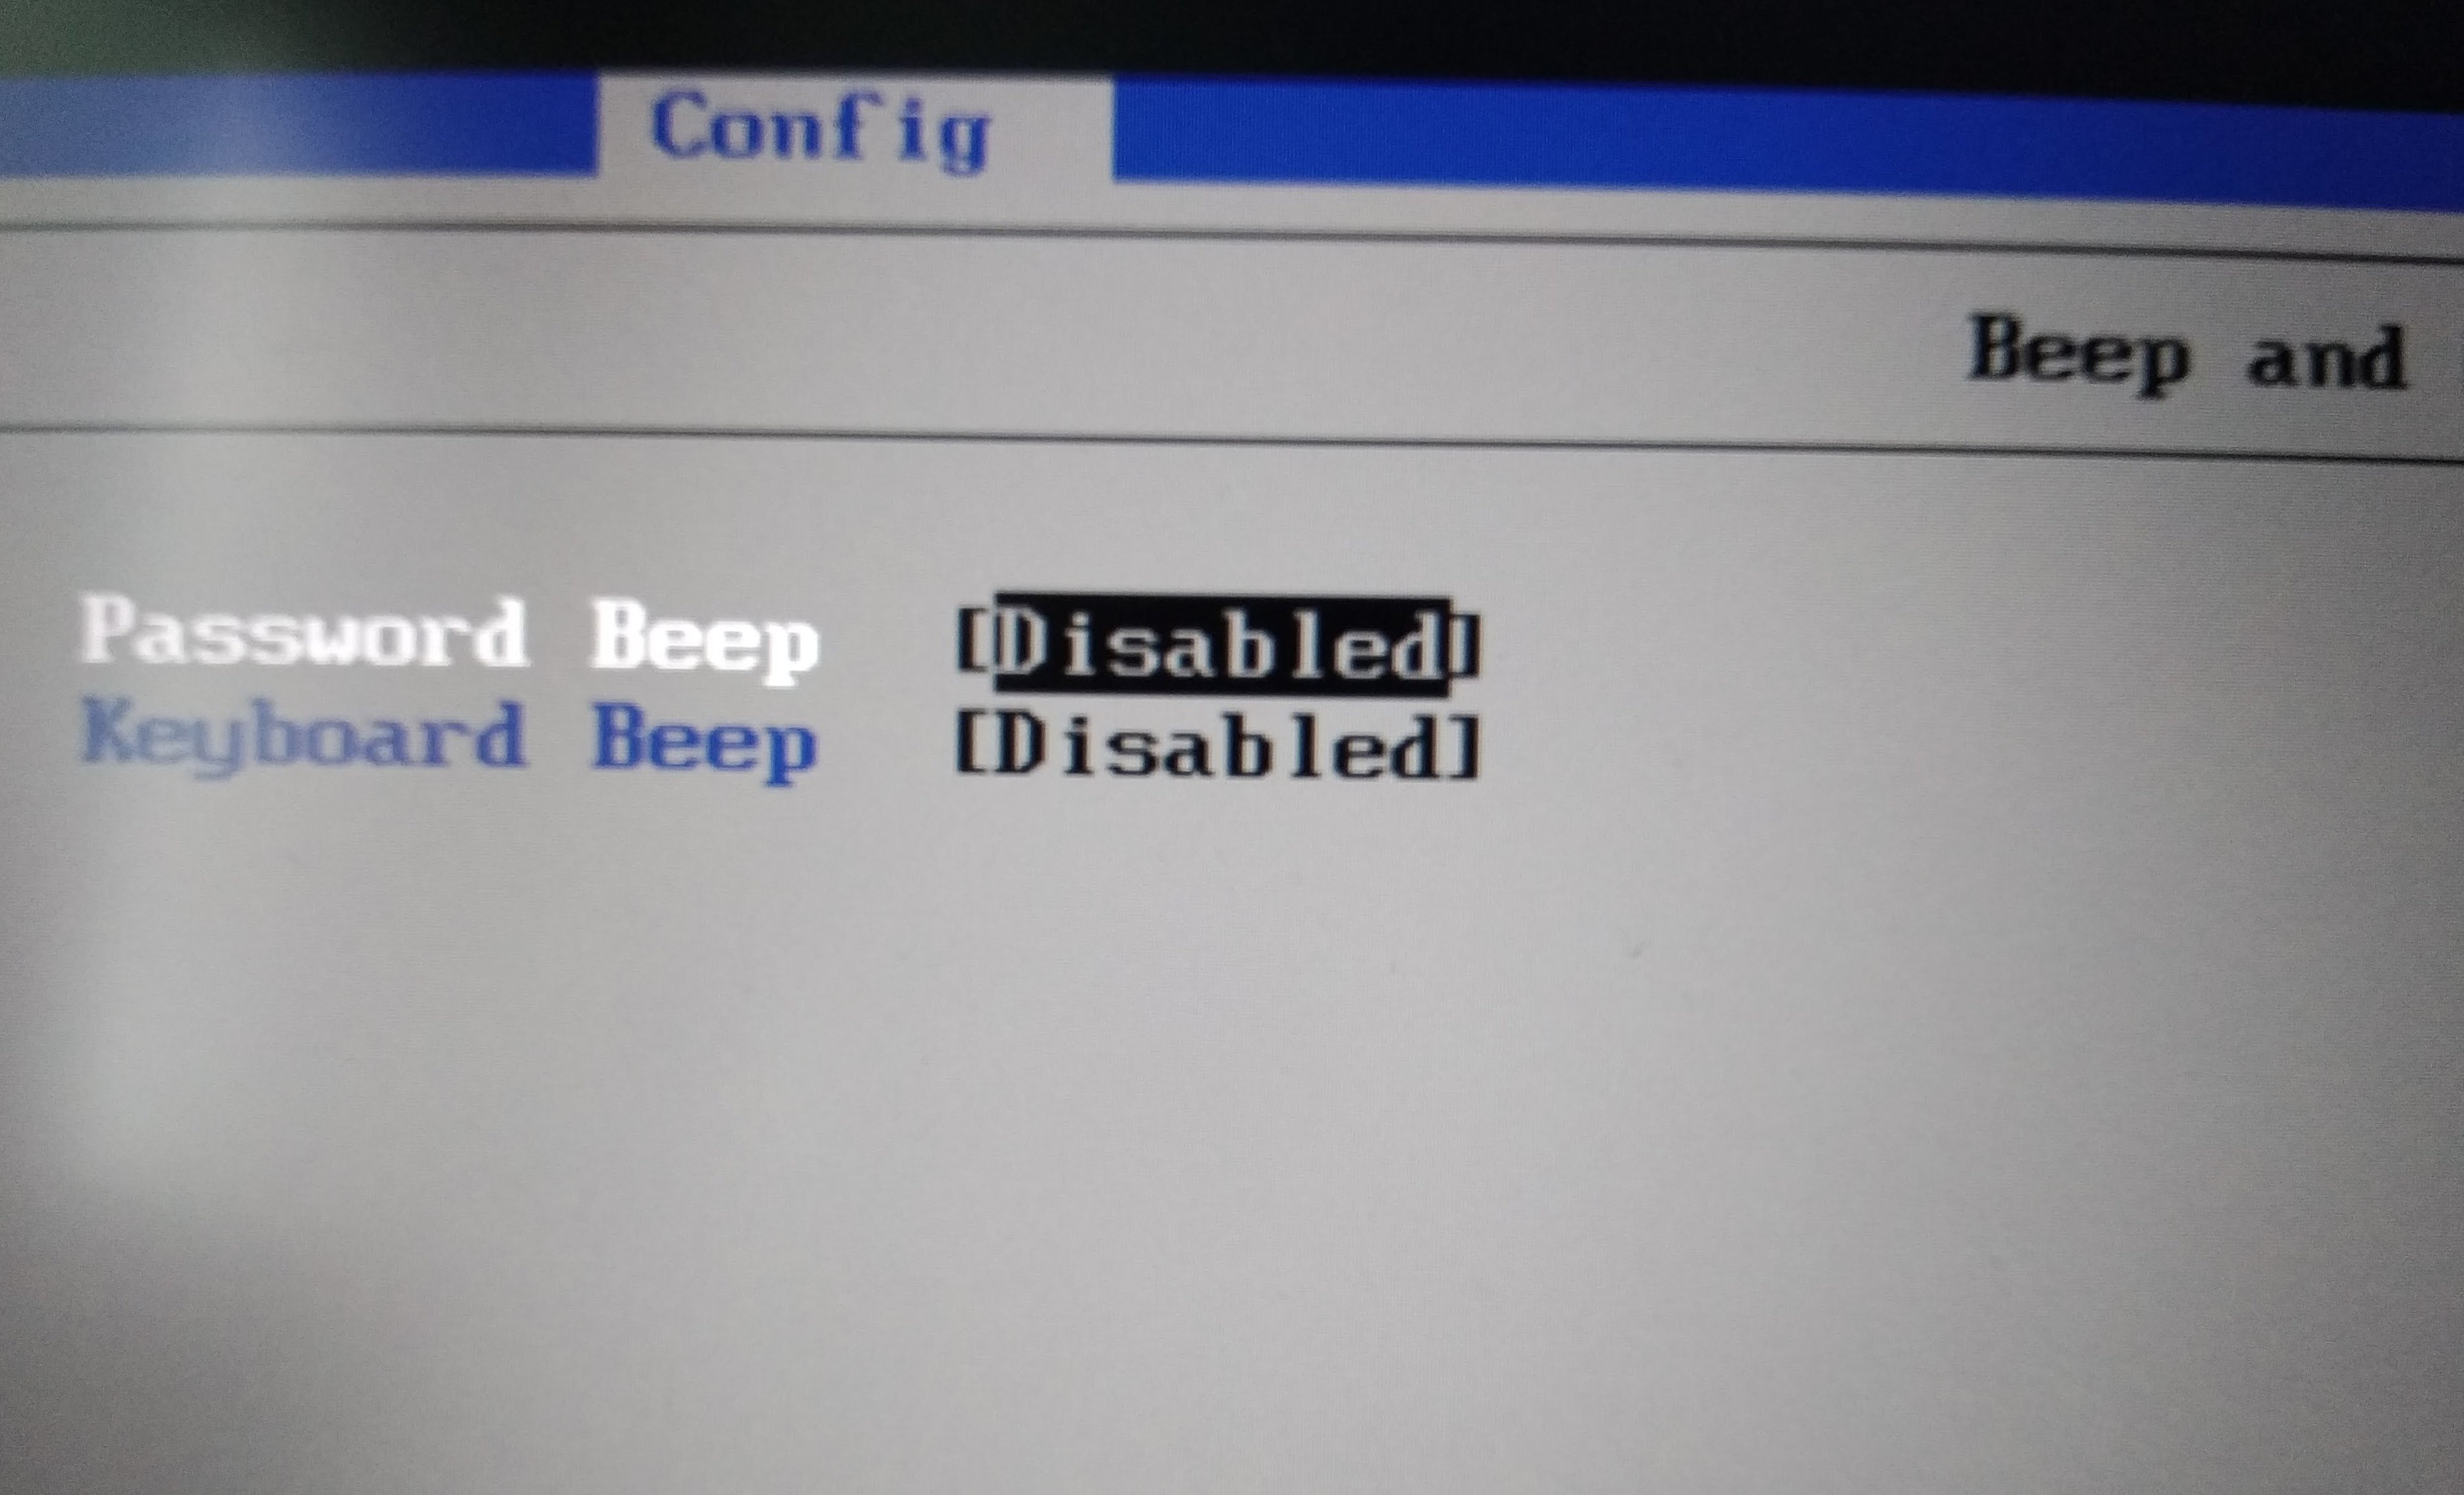 bios-beep-disabled